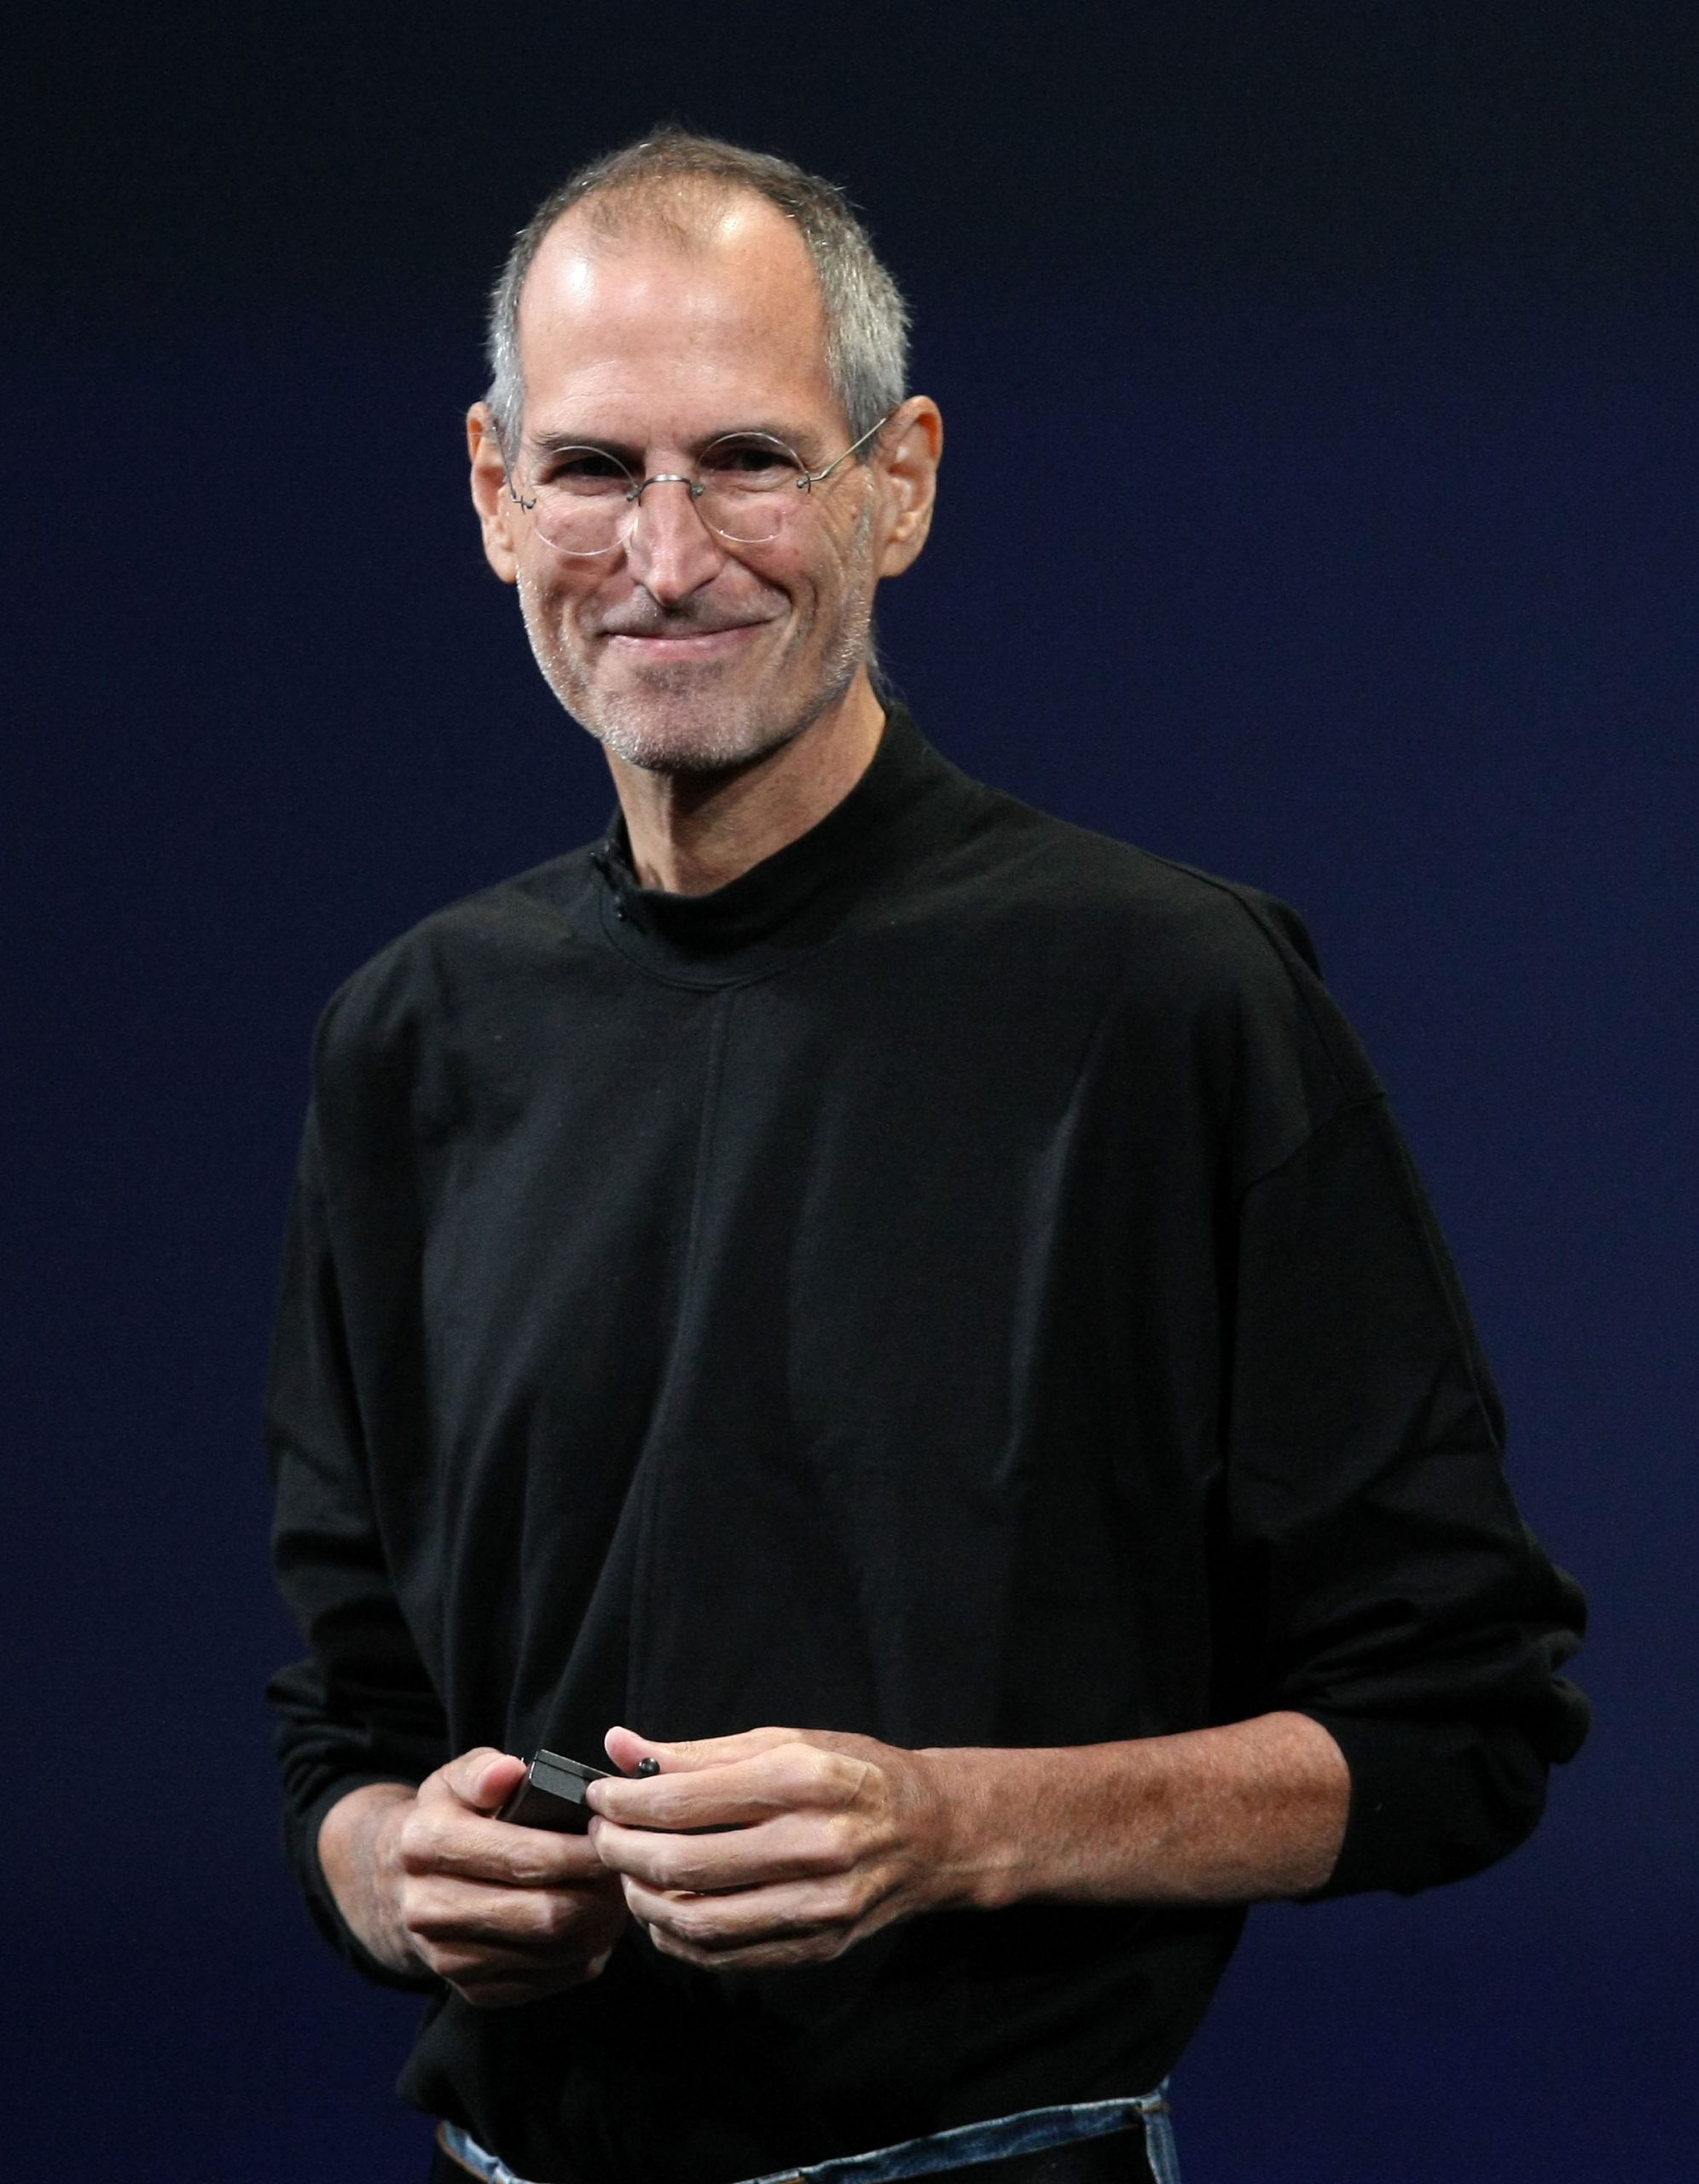 Steve Jobs photo 2